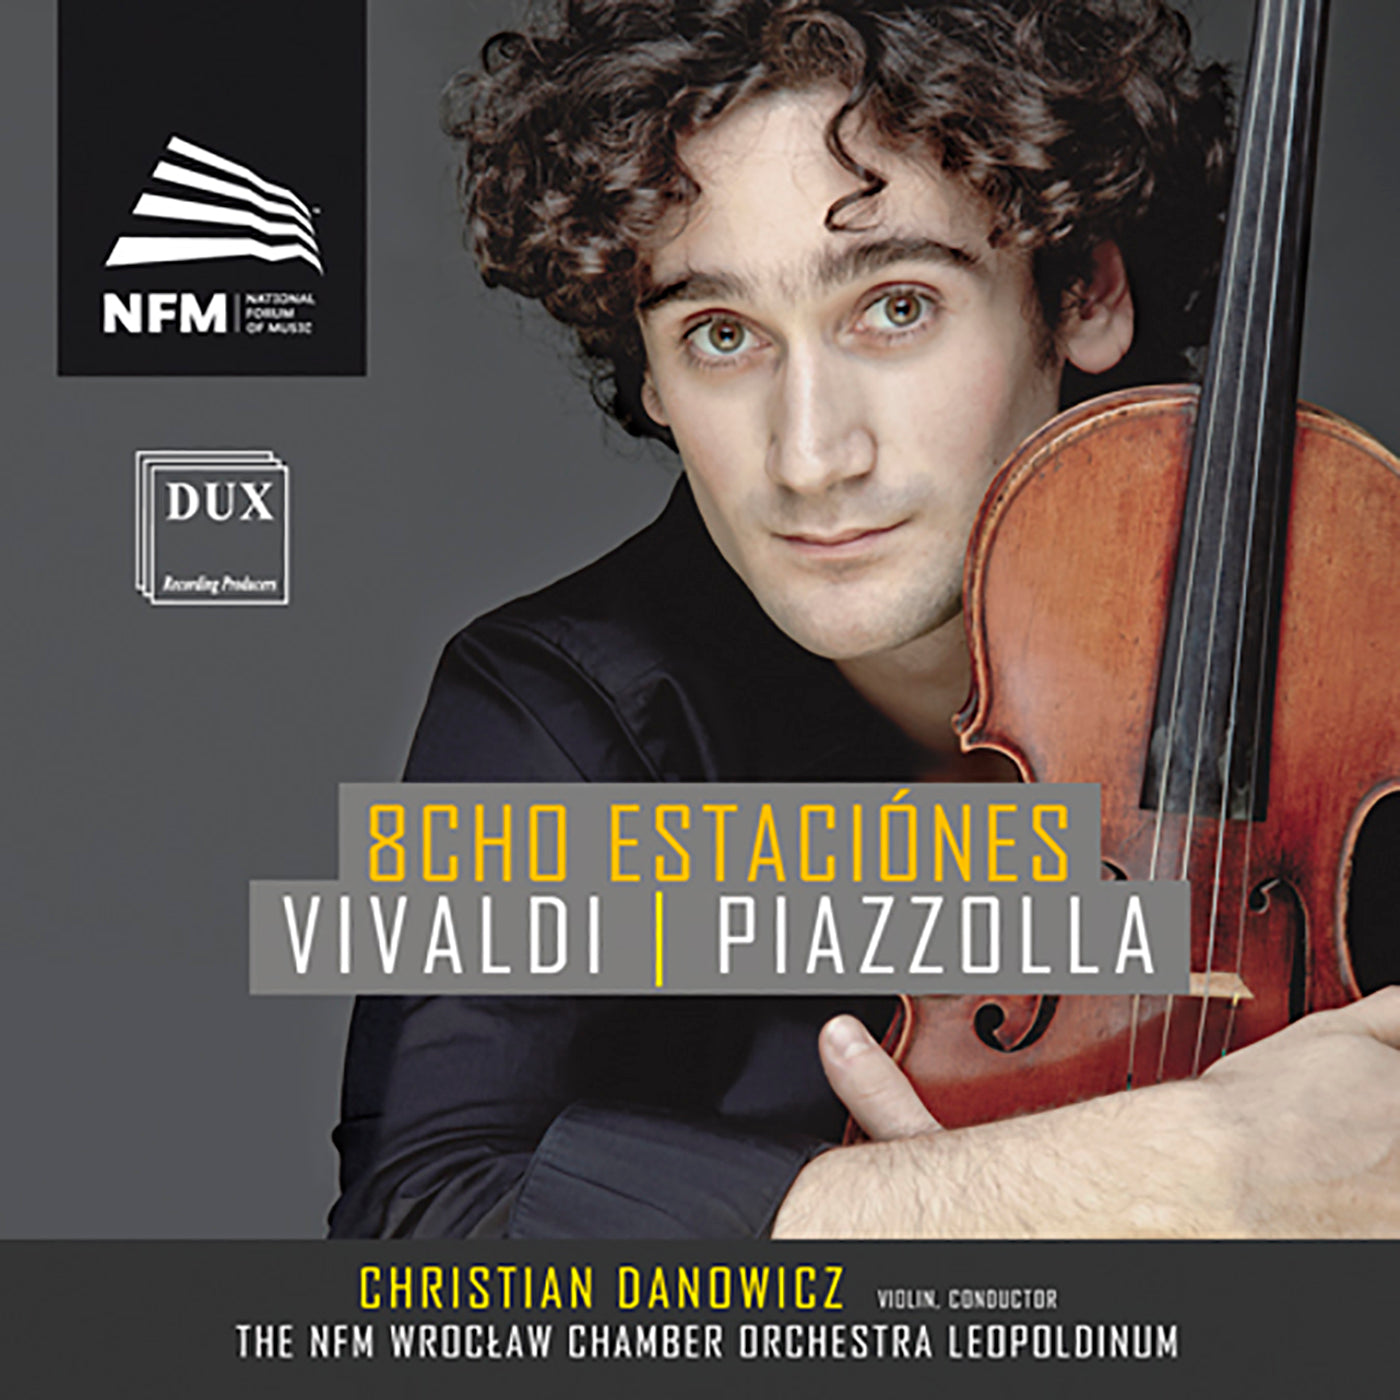 Vivaldi & Piazzolla: 8Cho Estaciónes  Danowicz, Nfm Wroclaw Chamber Orchestra Leopoldinum, Rupocinska, Misiak